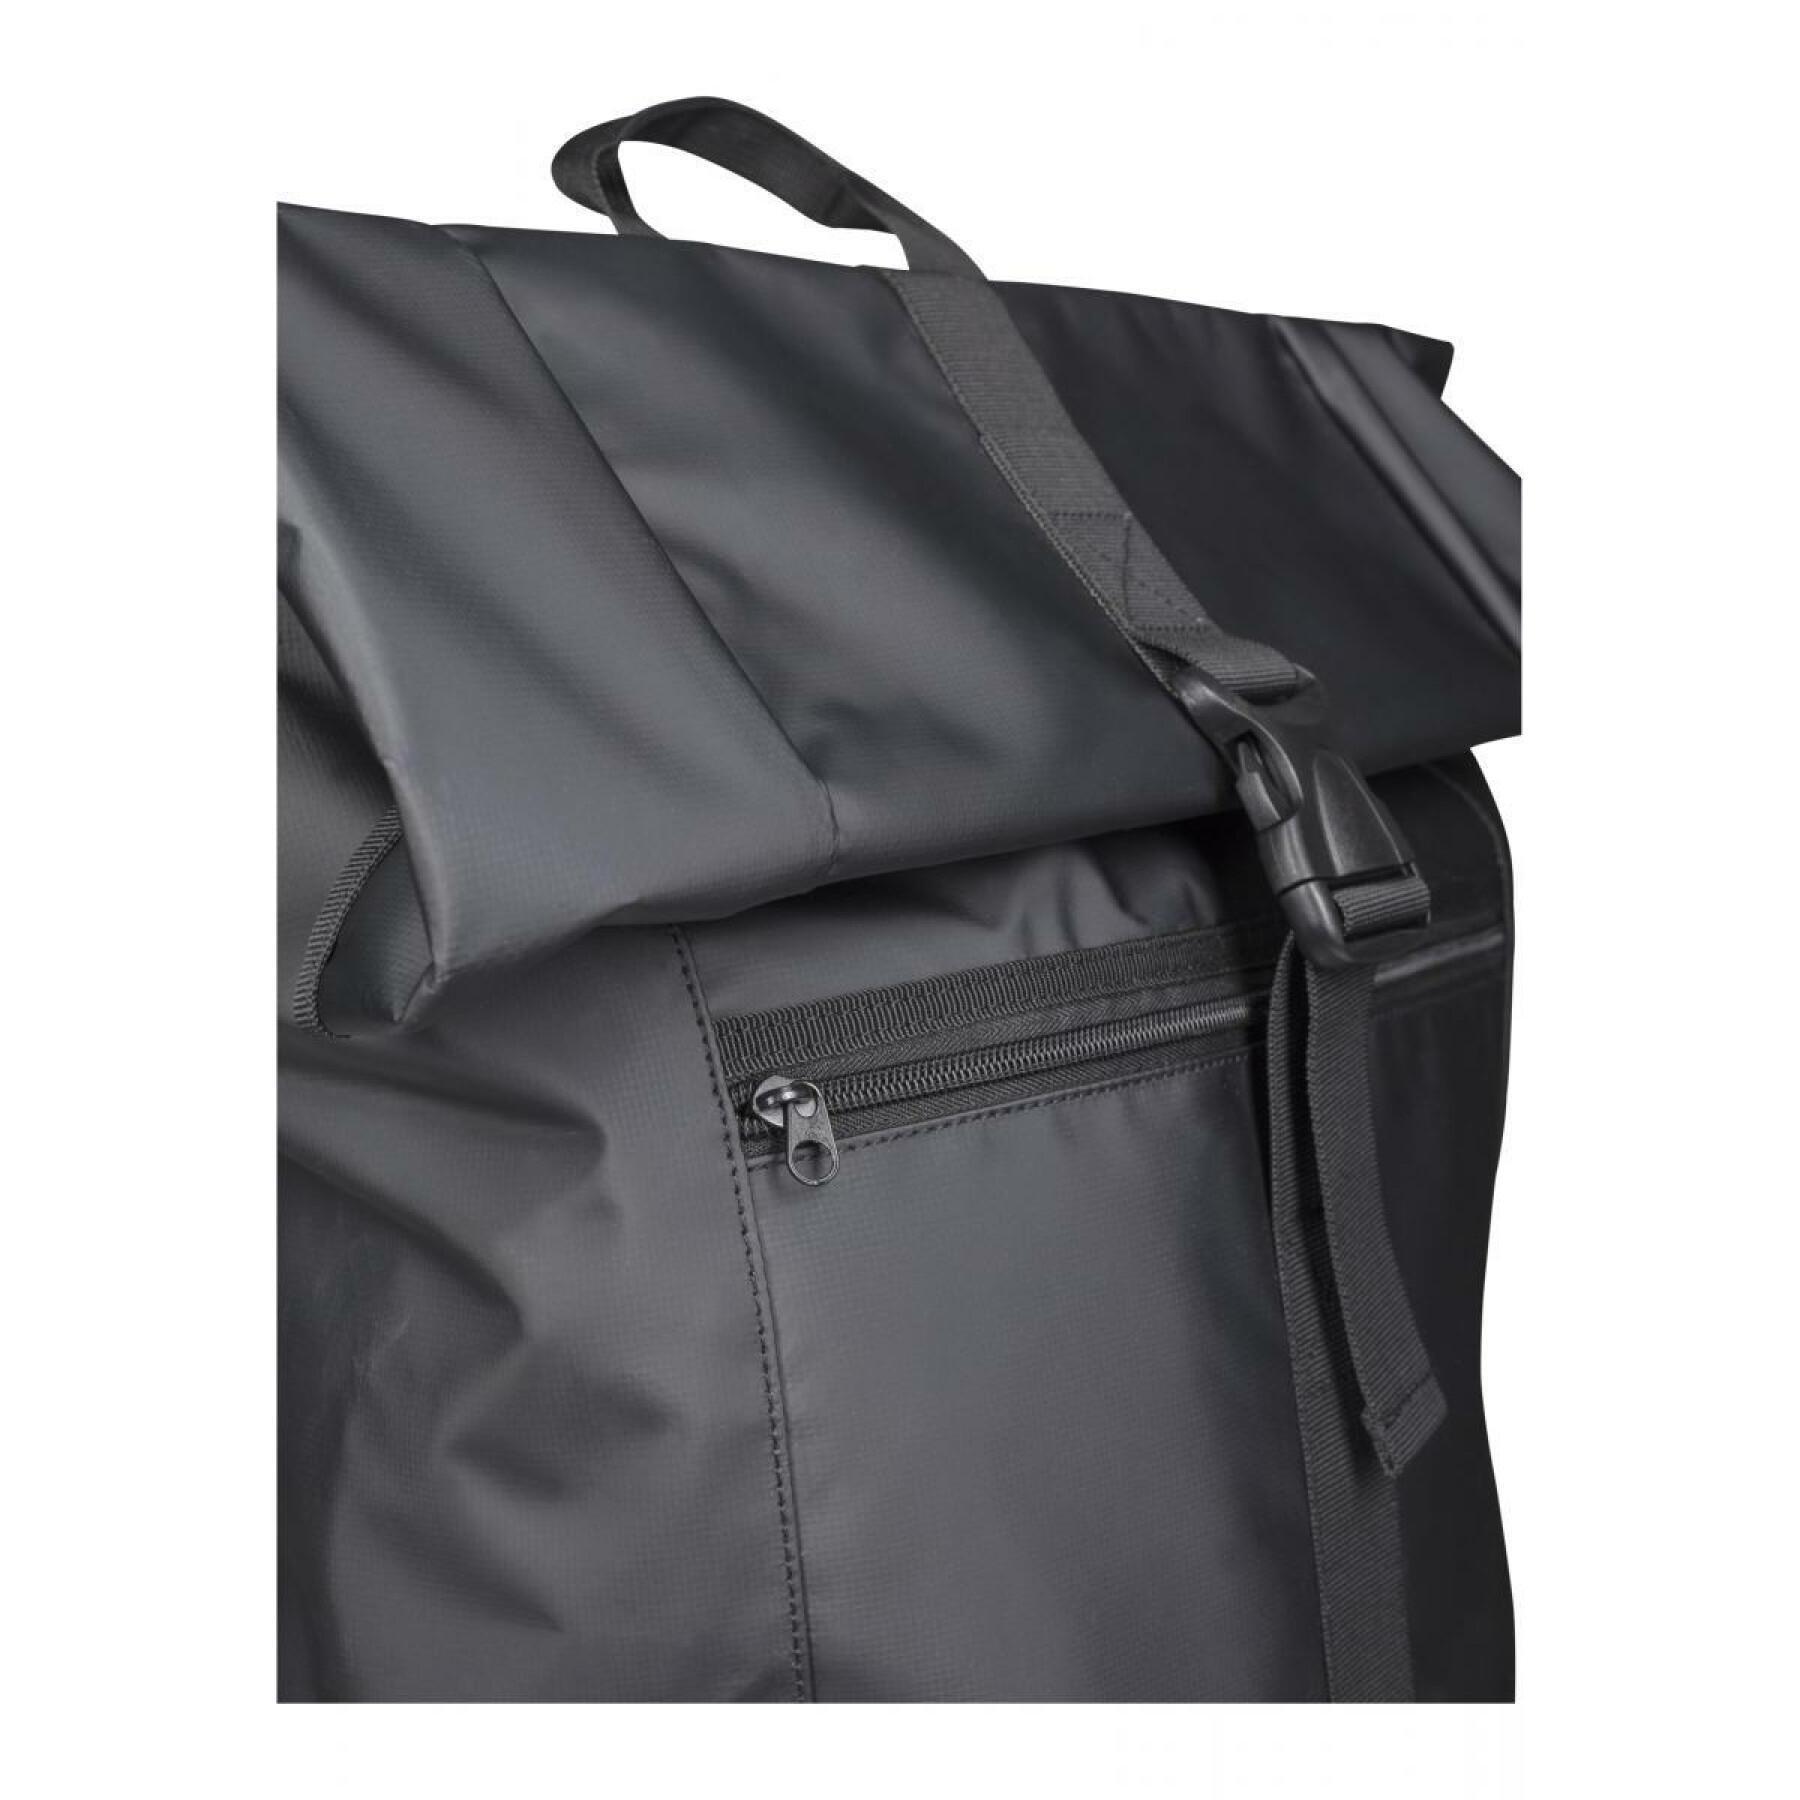 Urban Classic folded bag